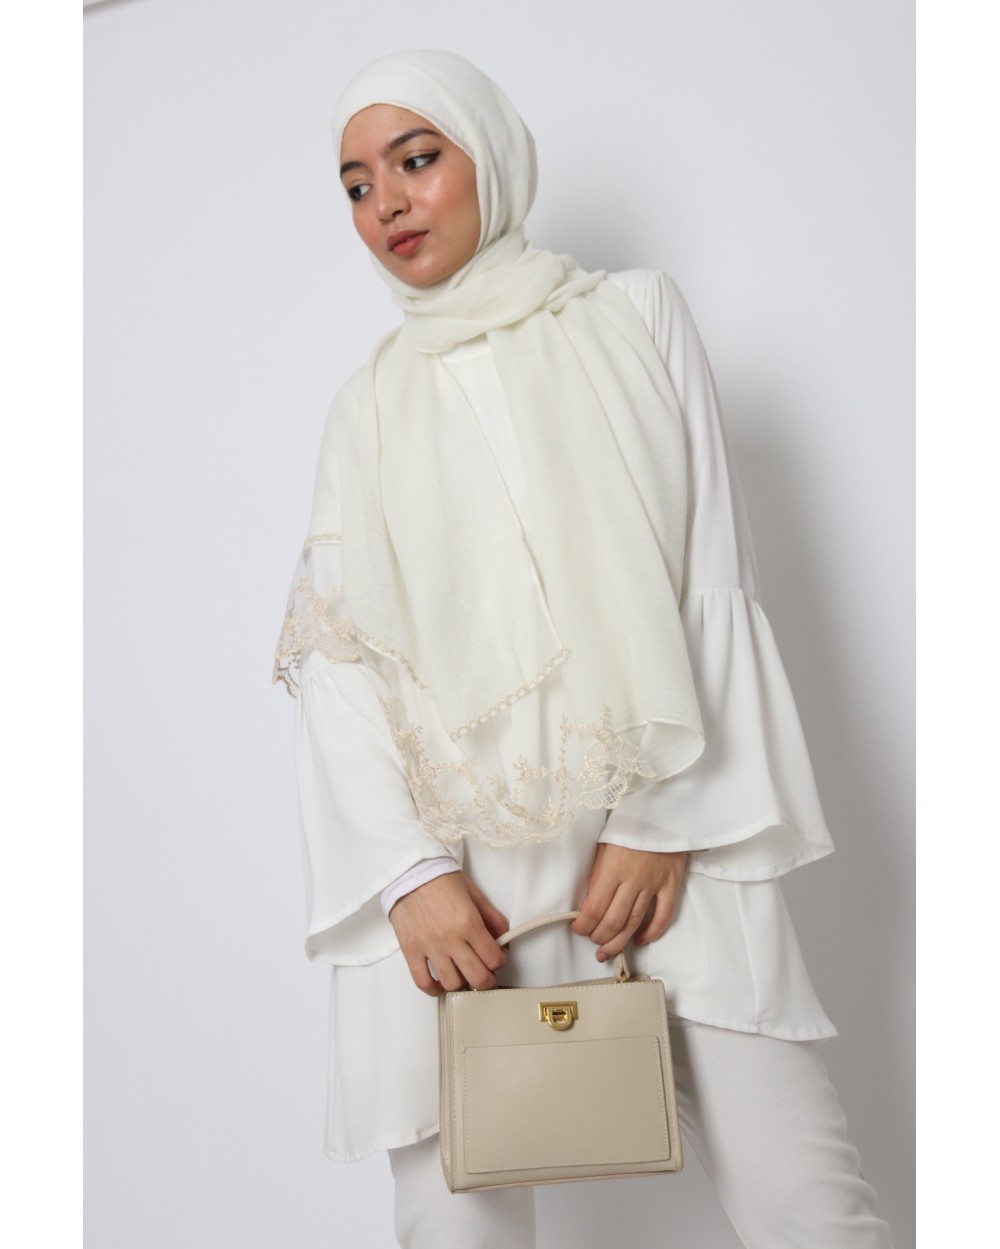 Maxi Hijab Carolyne lace